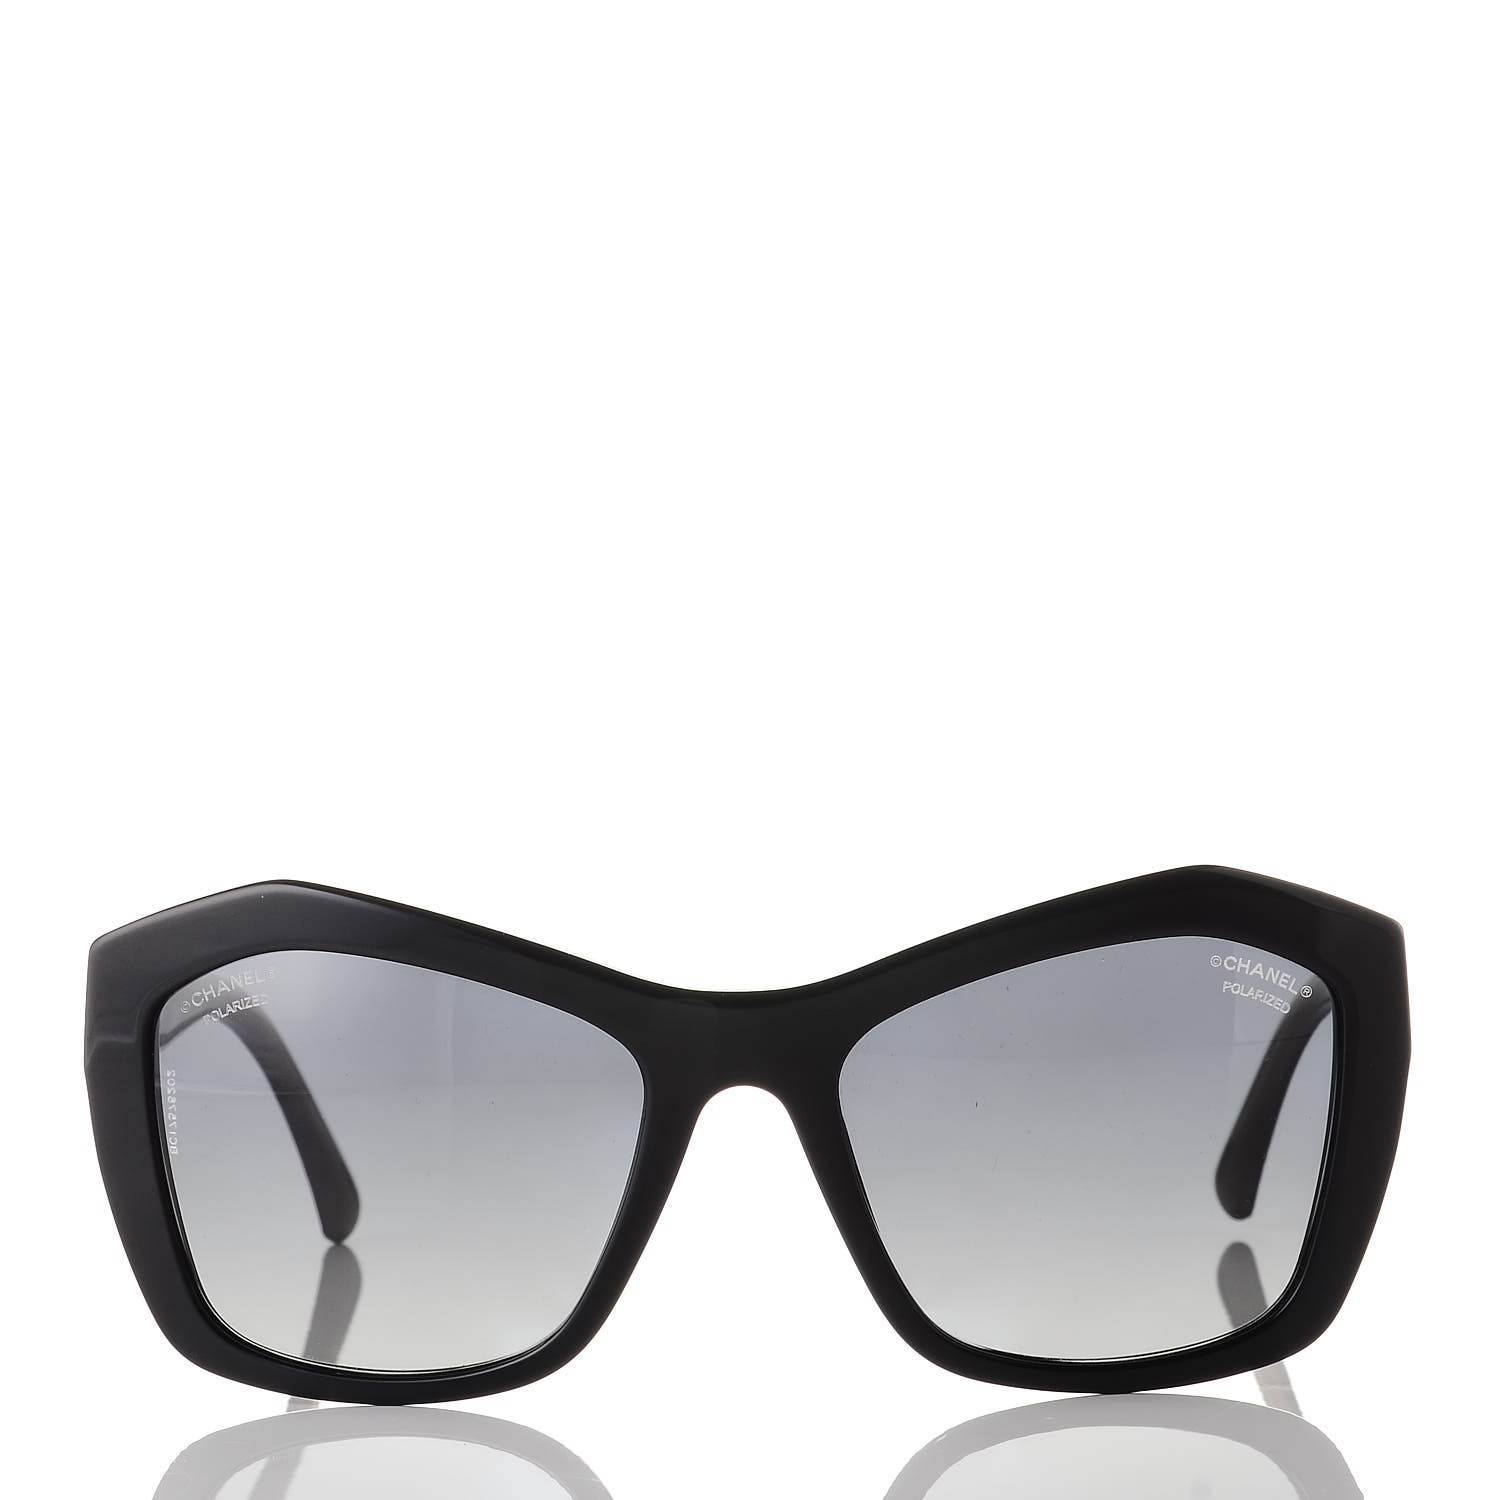 CHANEL Lace Effect Sunglasses 5296-A Black 289840